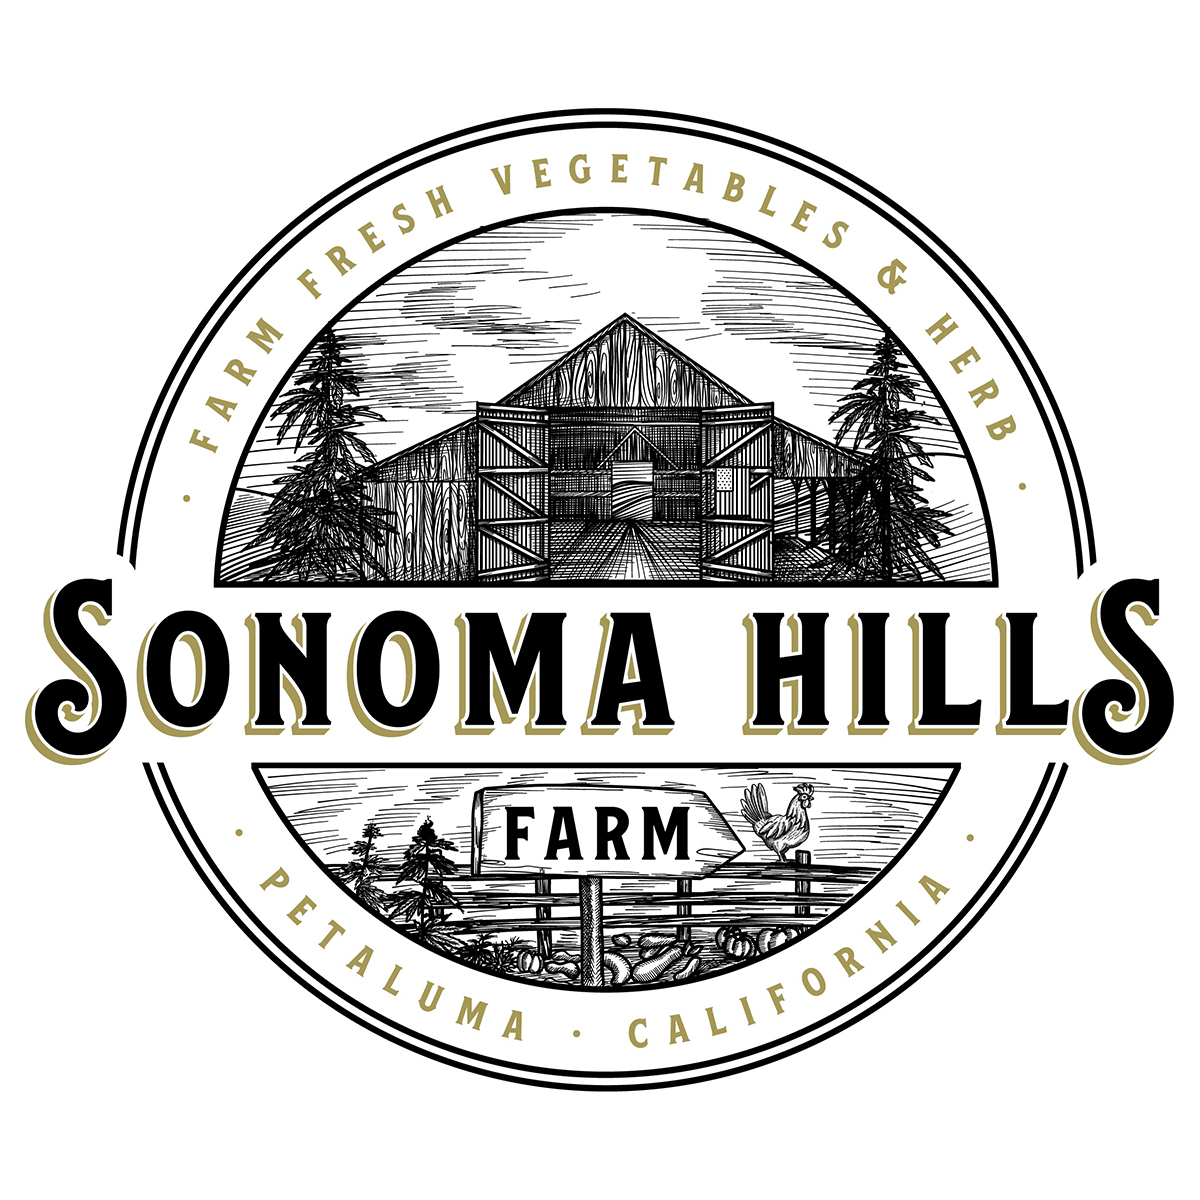 Sonoma Hills Farm